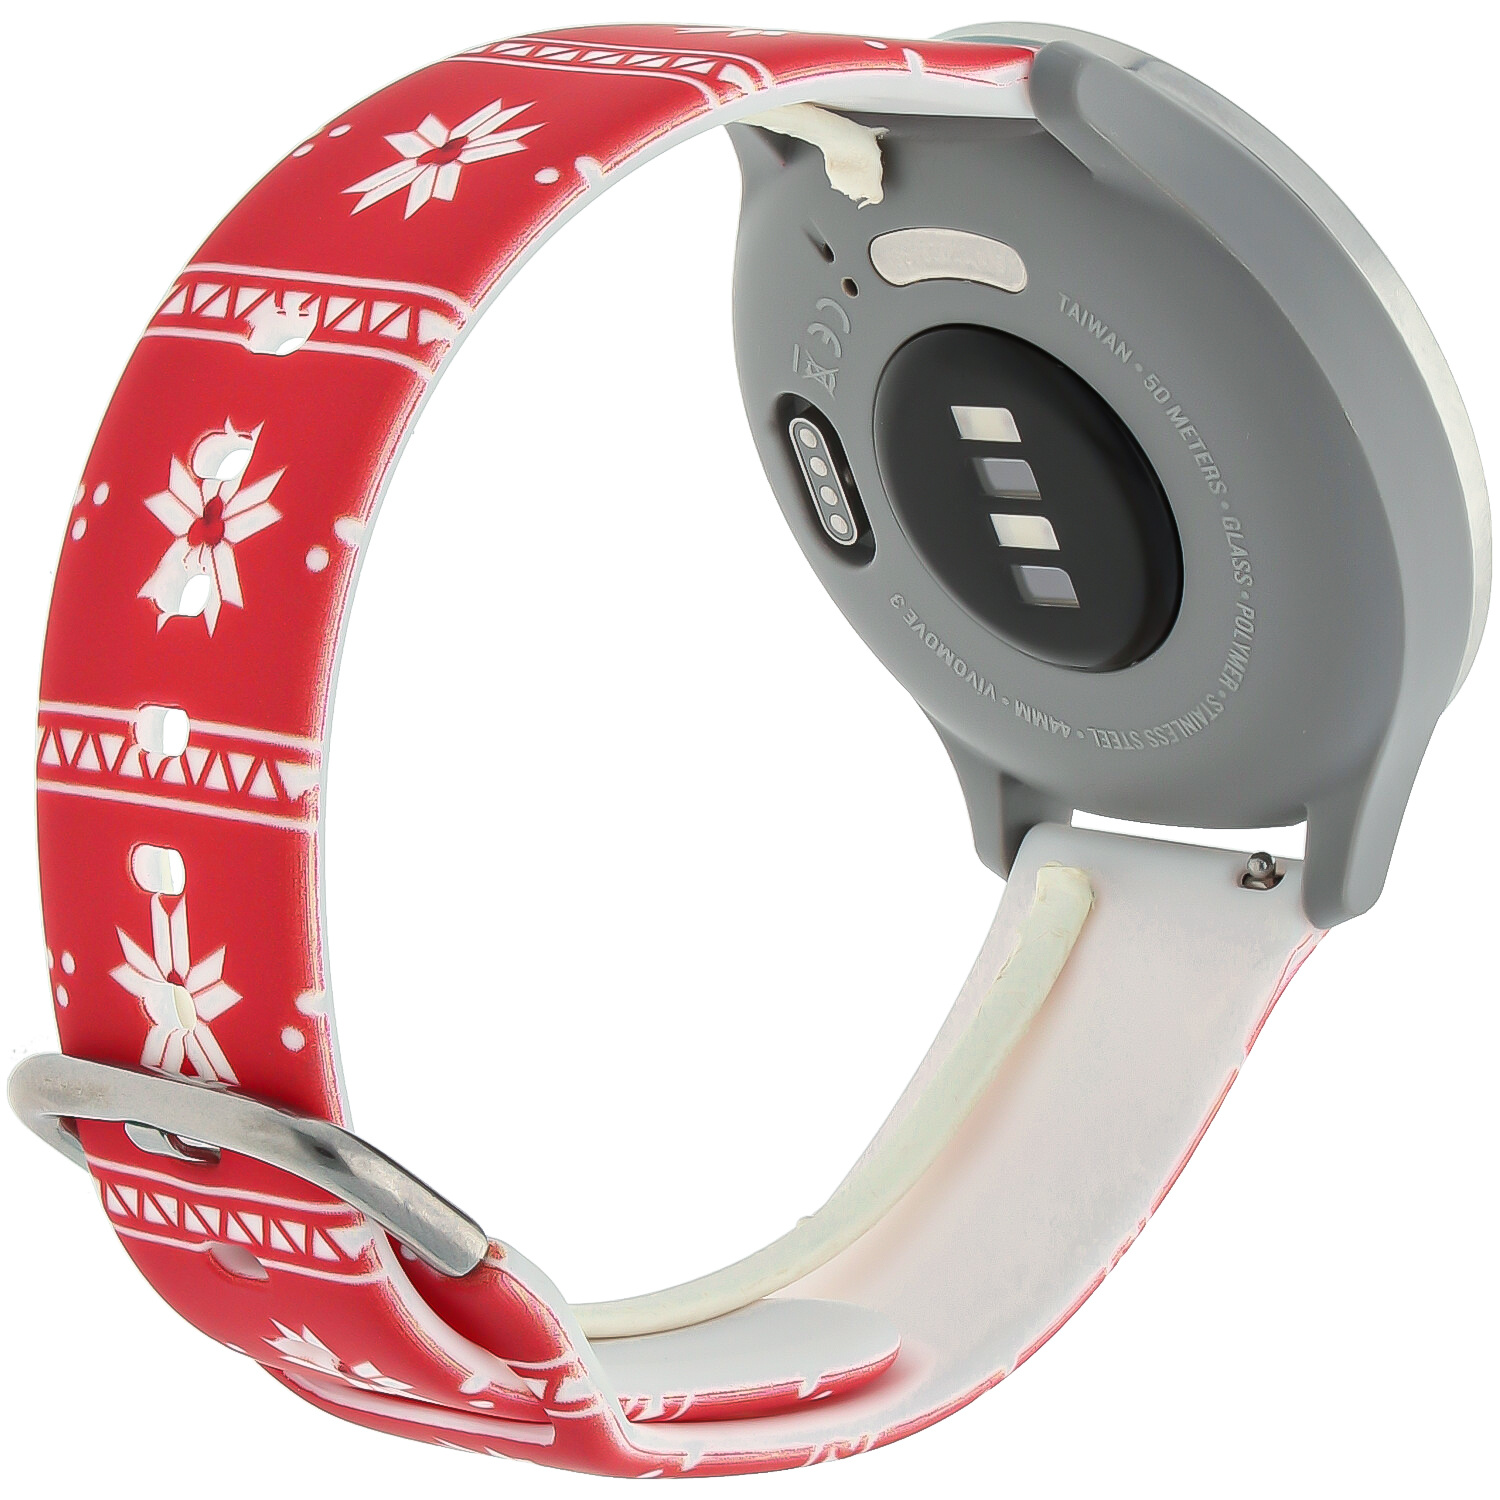 Cinturino sport con stampa per Samsung Galaxy Watch - Stella di Natale rossa